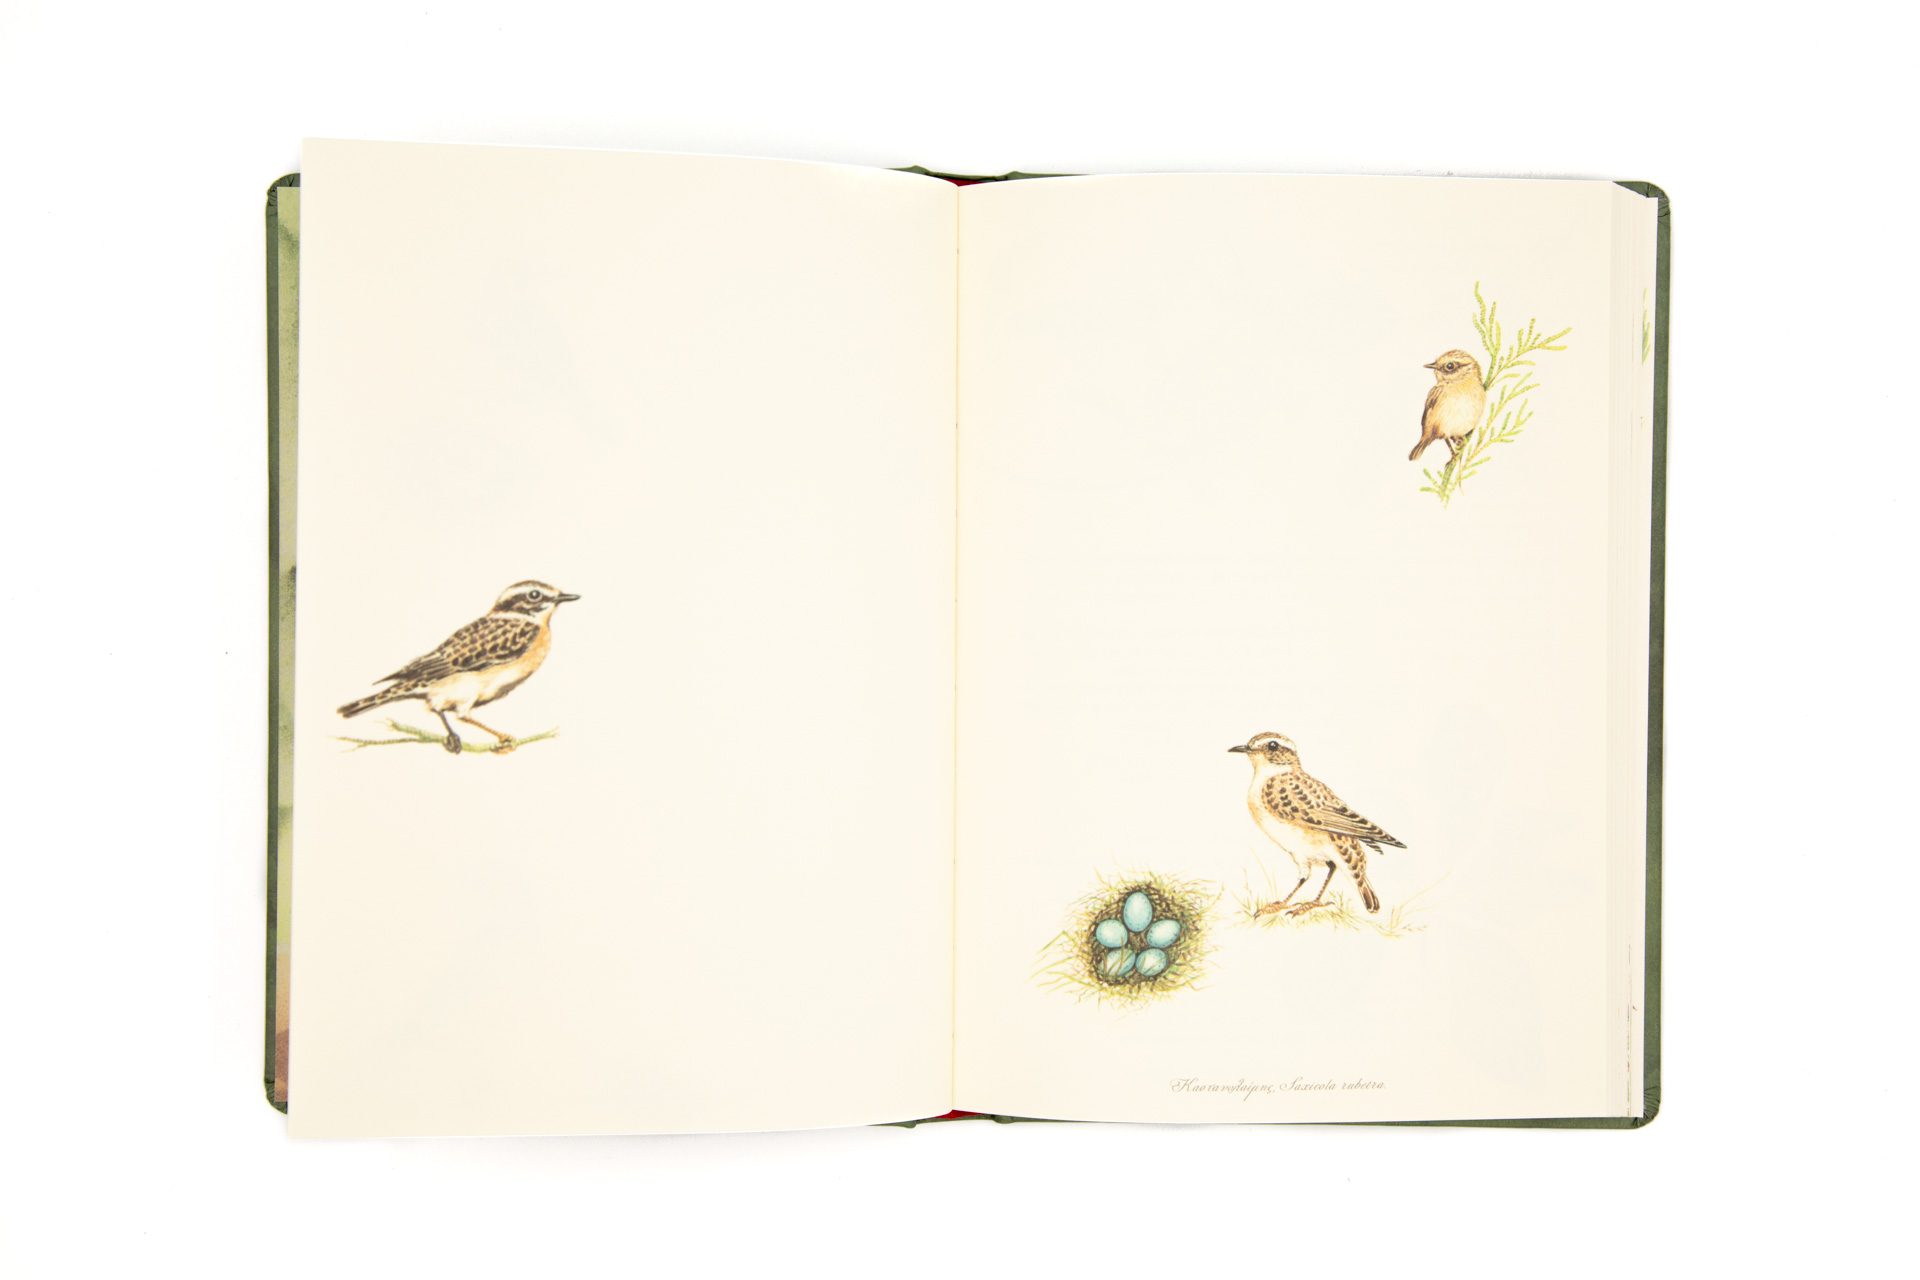 Book of secrets "the World of Birds" - Spread